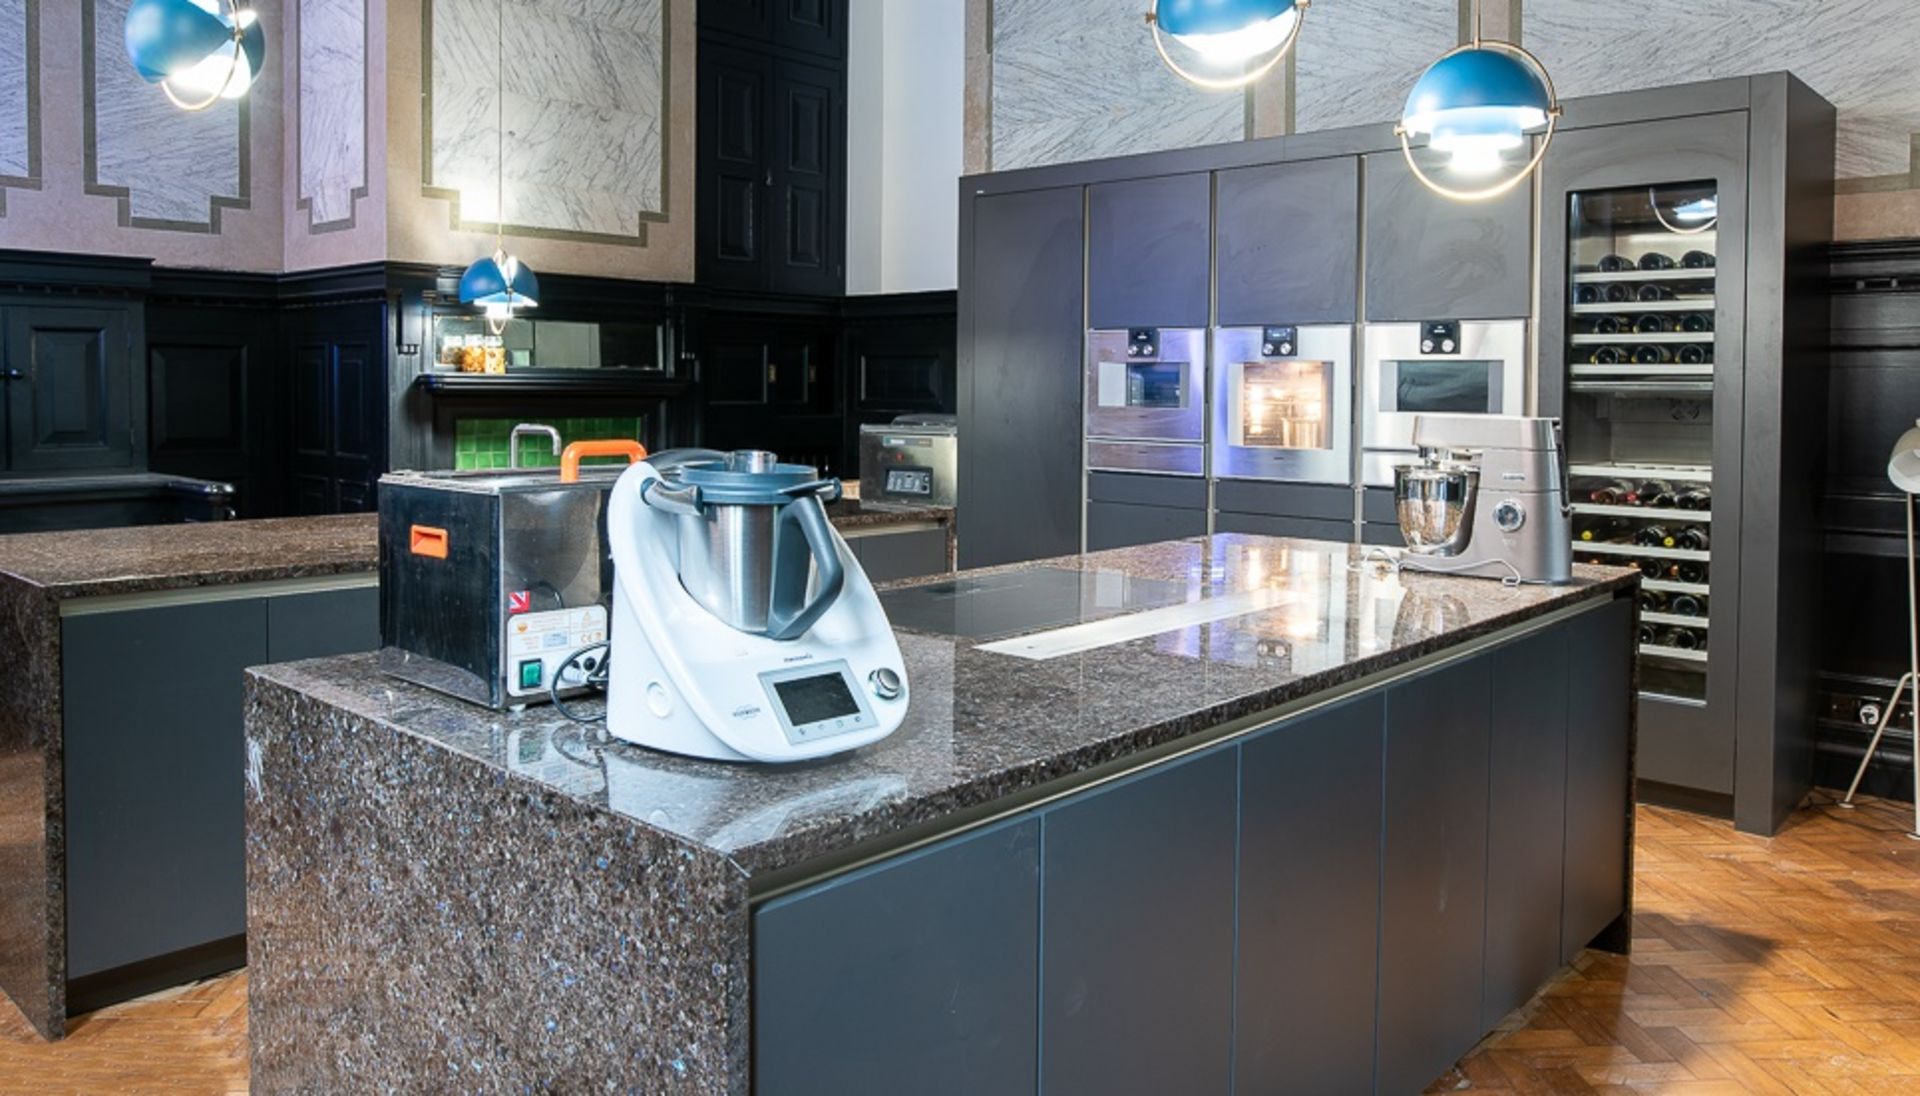 1 x SieMatic Fitted Kitchen in Basalt Grey Matt With Handleless Doors - Features Gaggenau